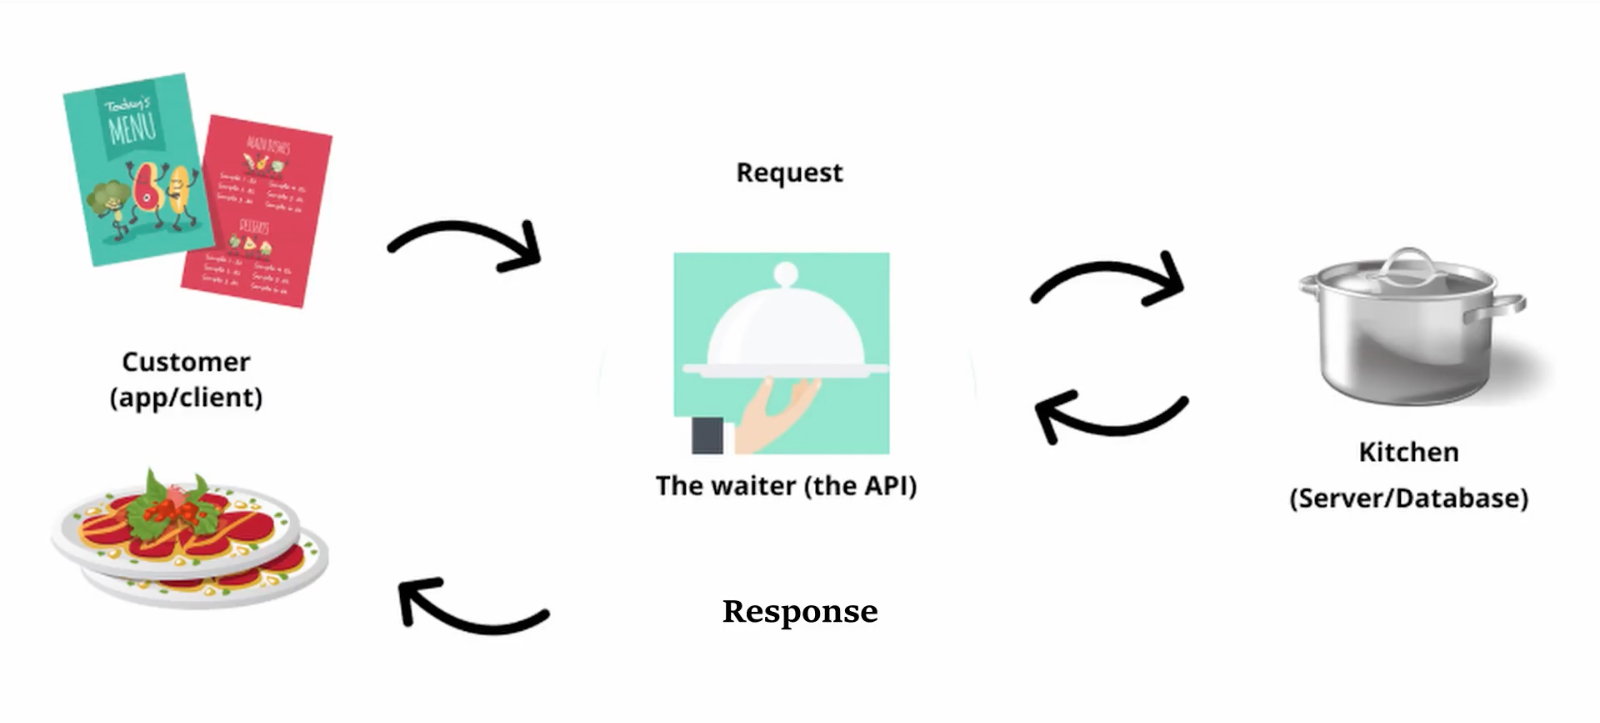 Restaurant Example to explain an API